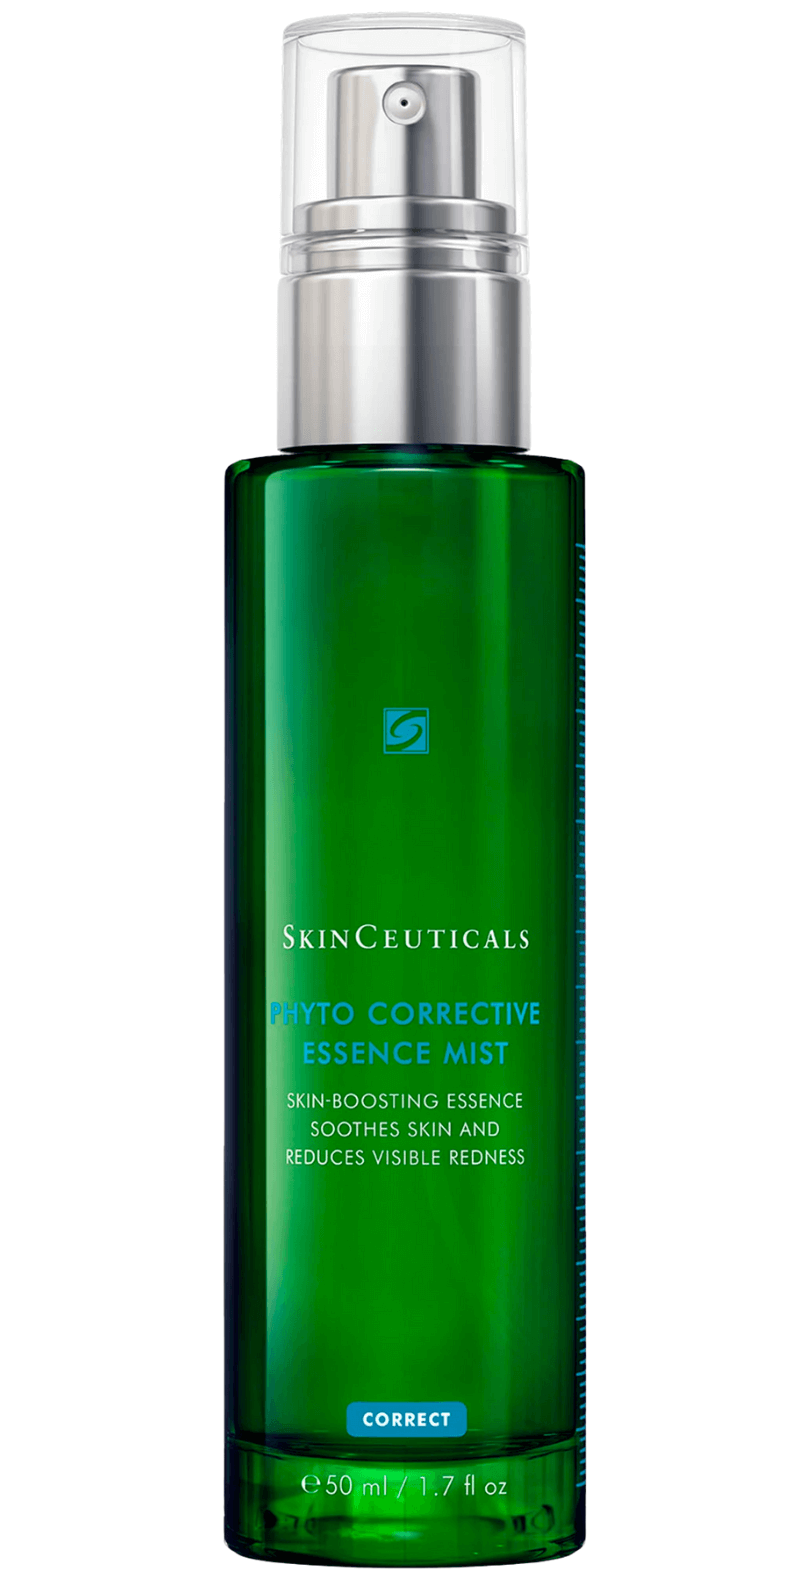 SkinCeuticals Phyto Corrective Essence Mist